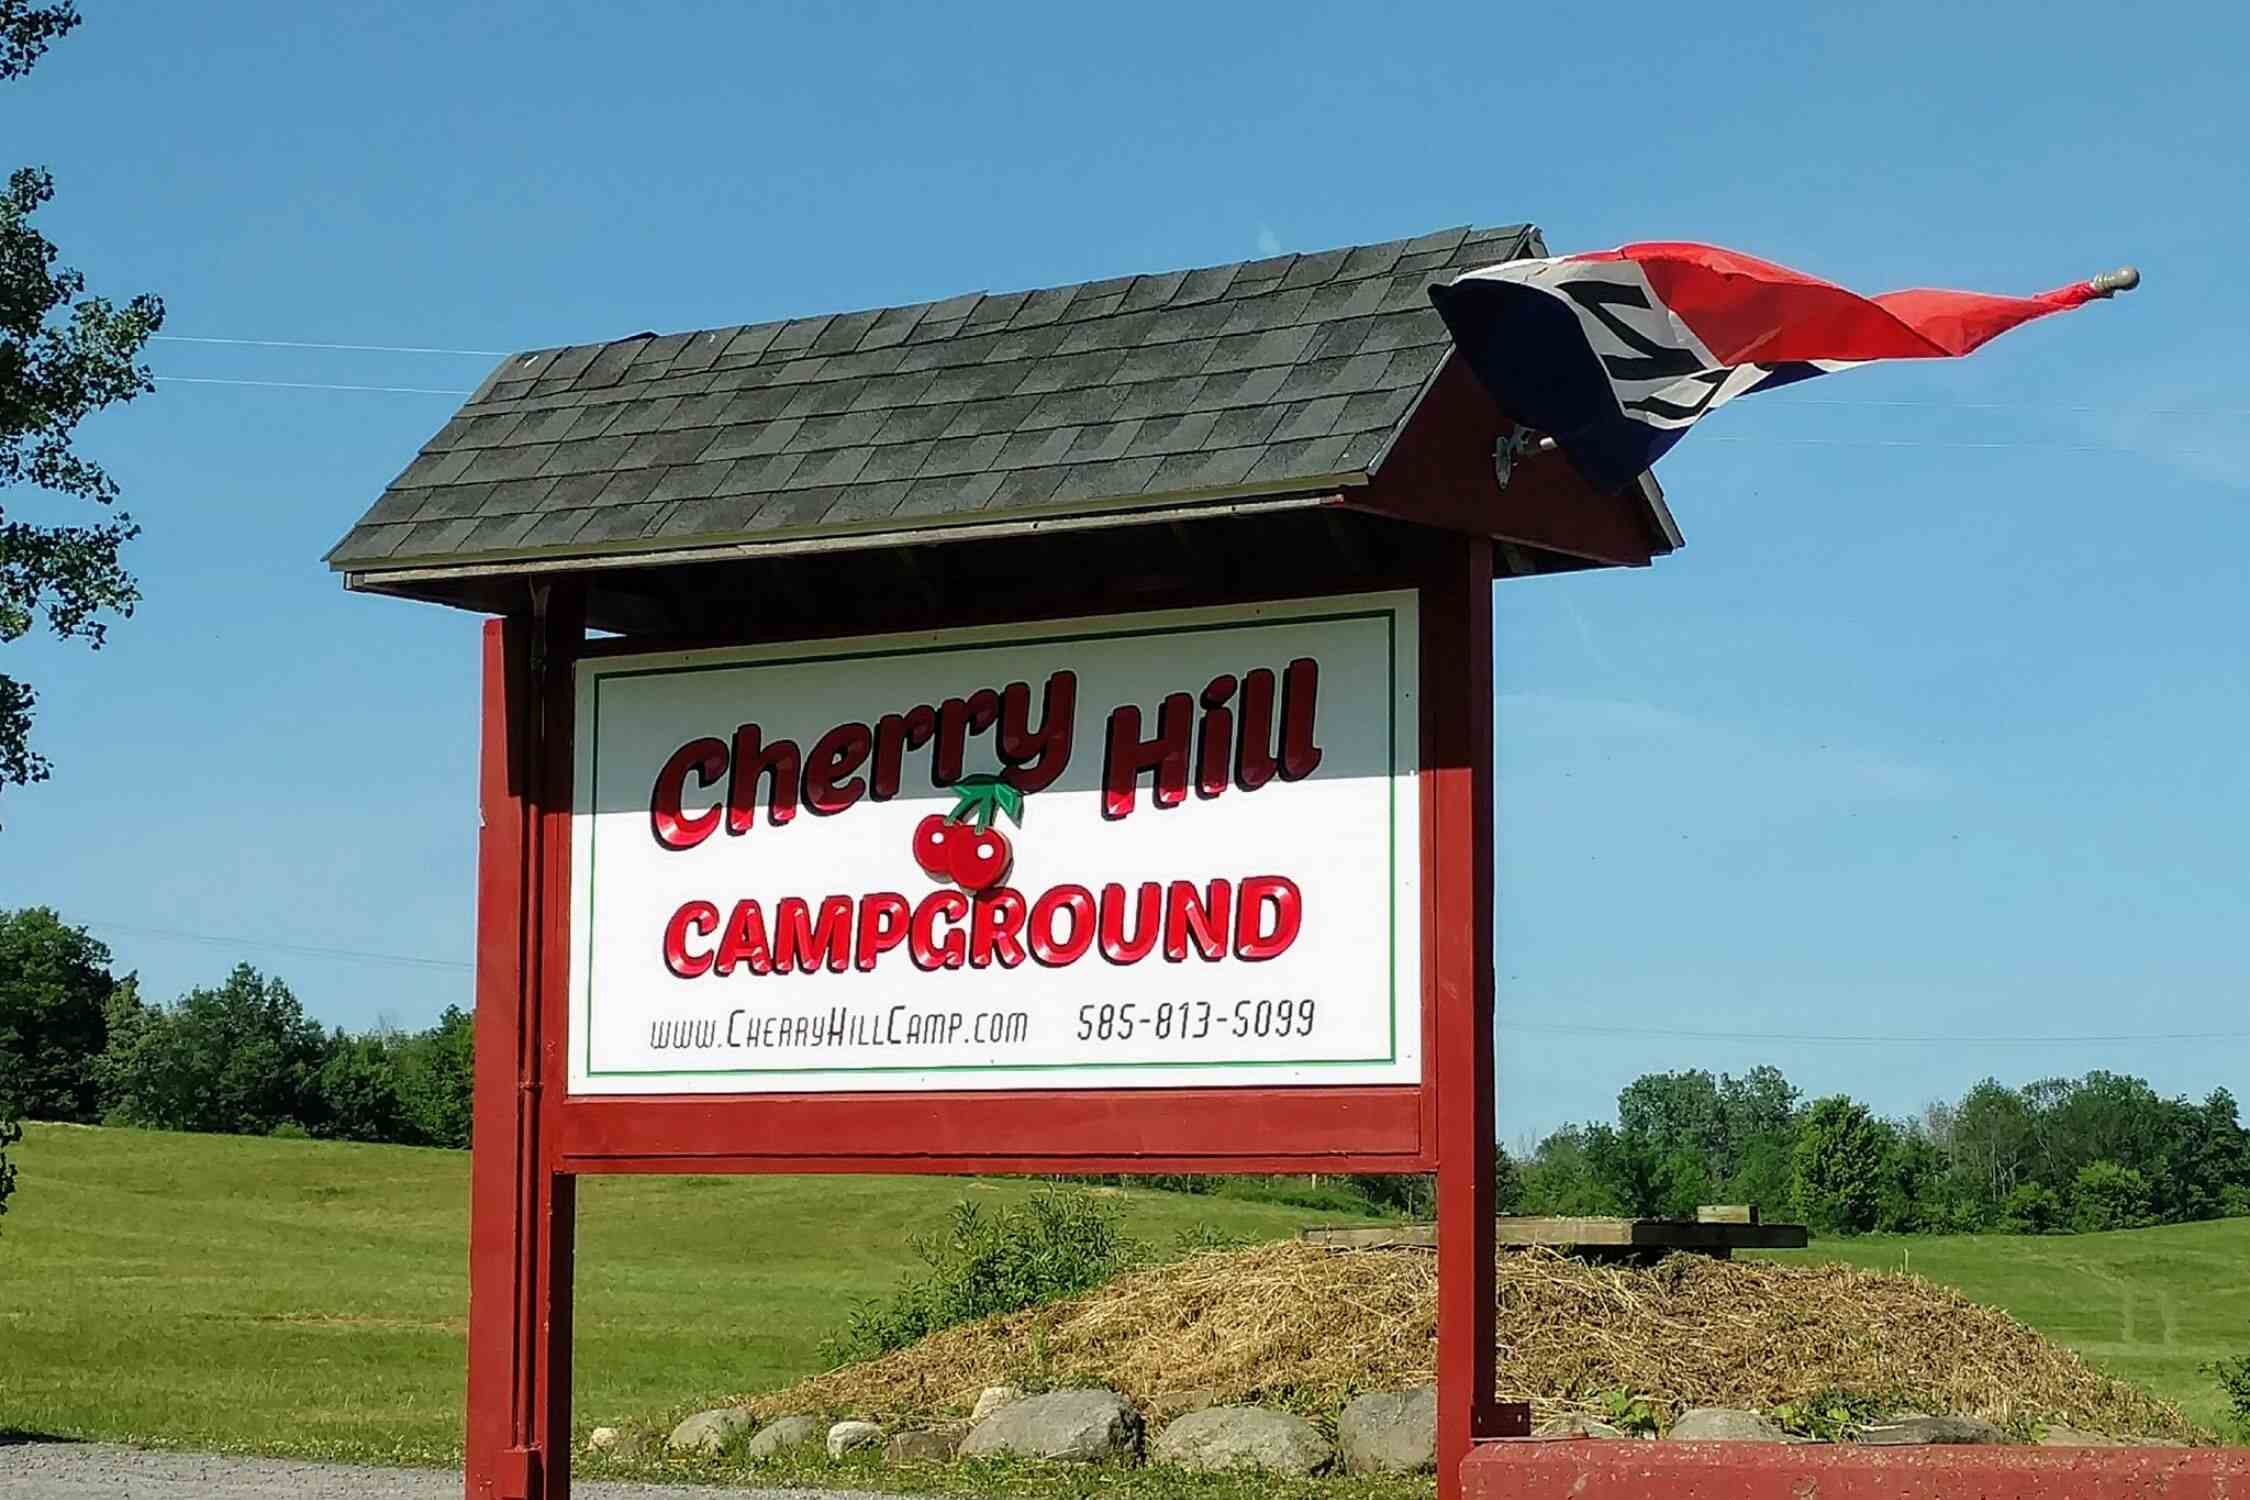  Cherry Hill Campground